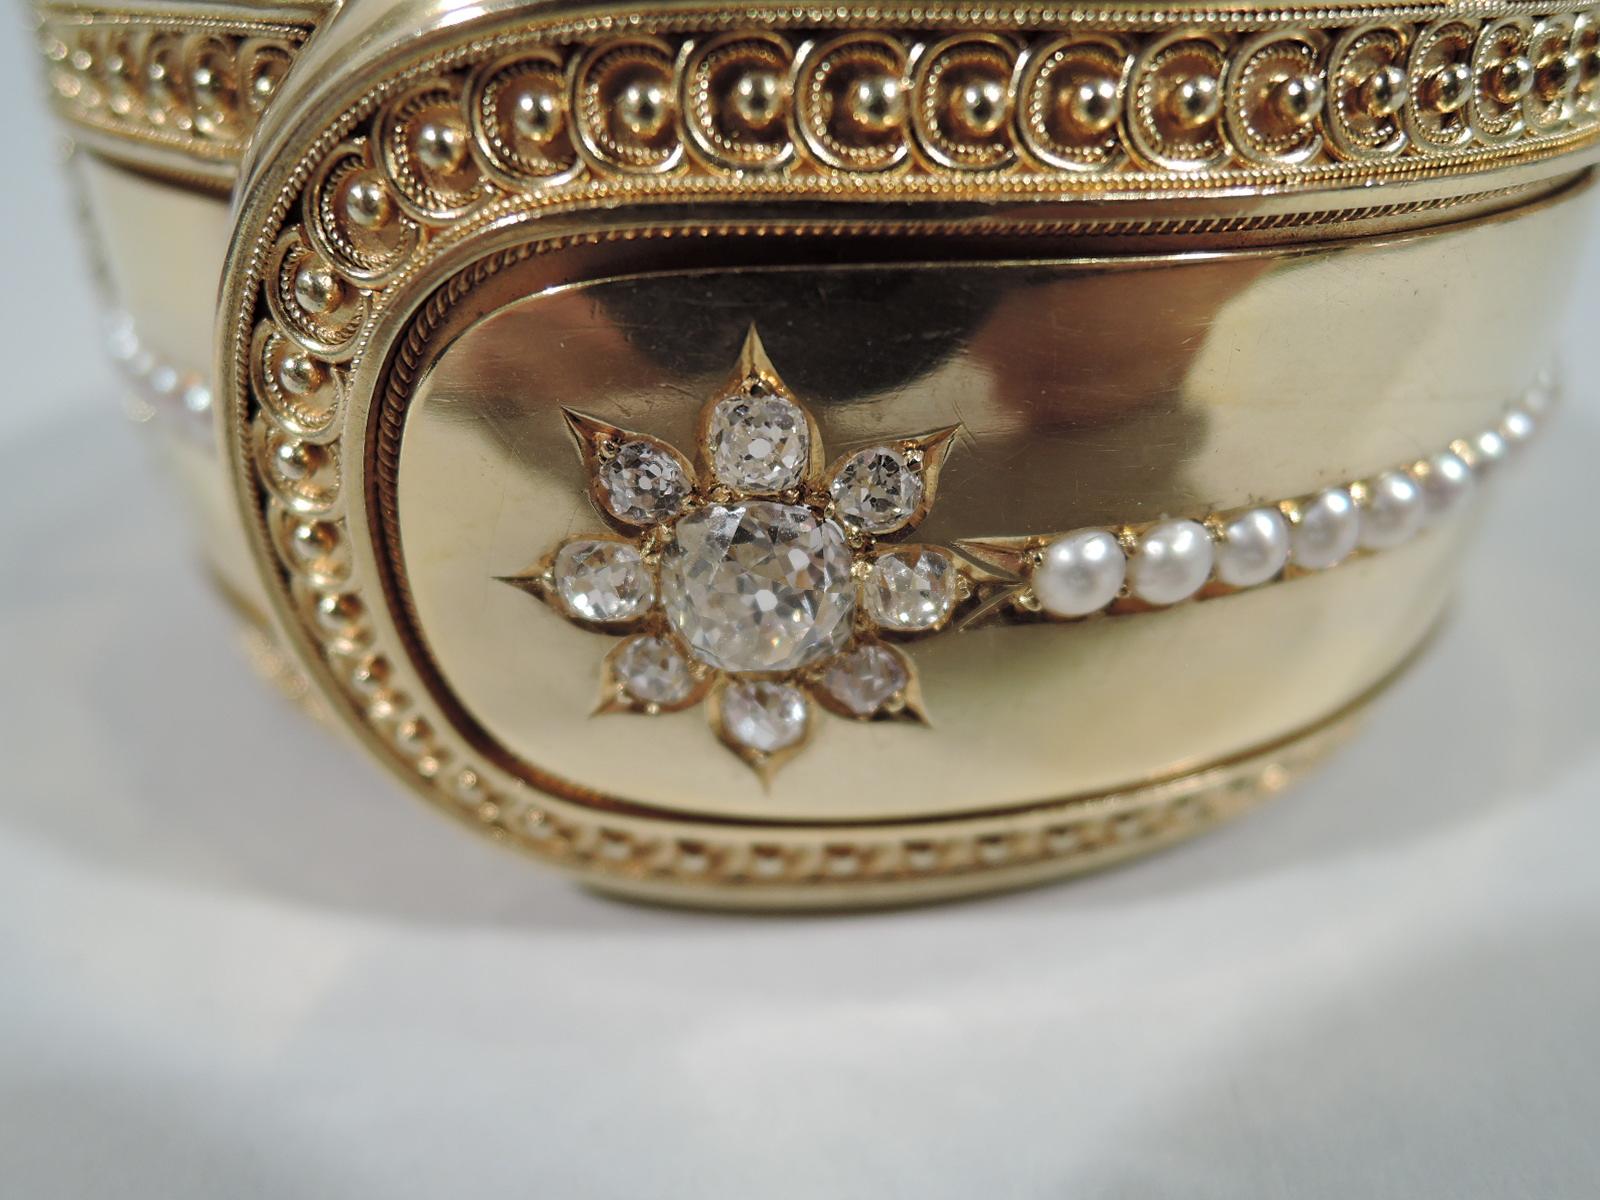 Women's Antique English 18 Karat Gold Cuff Bracelet with Pearls and Diamonds